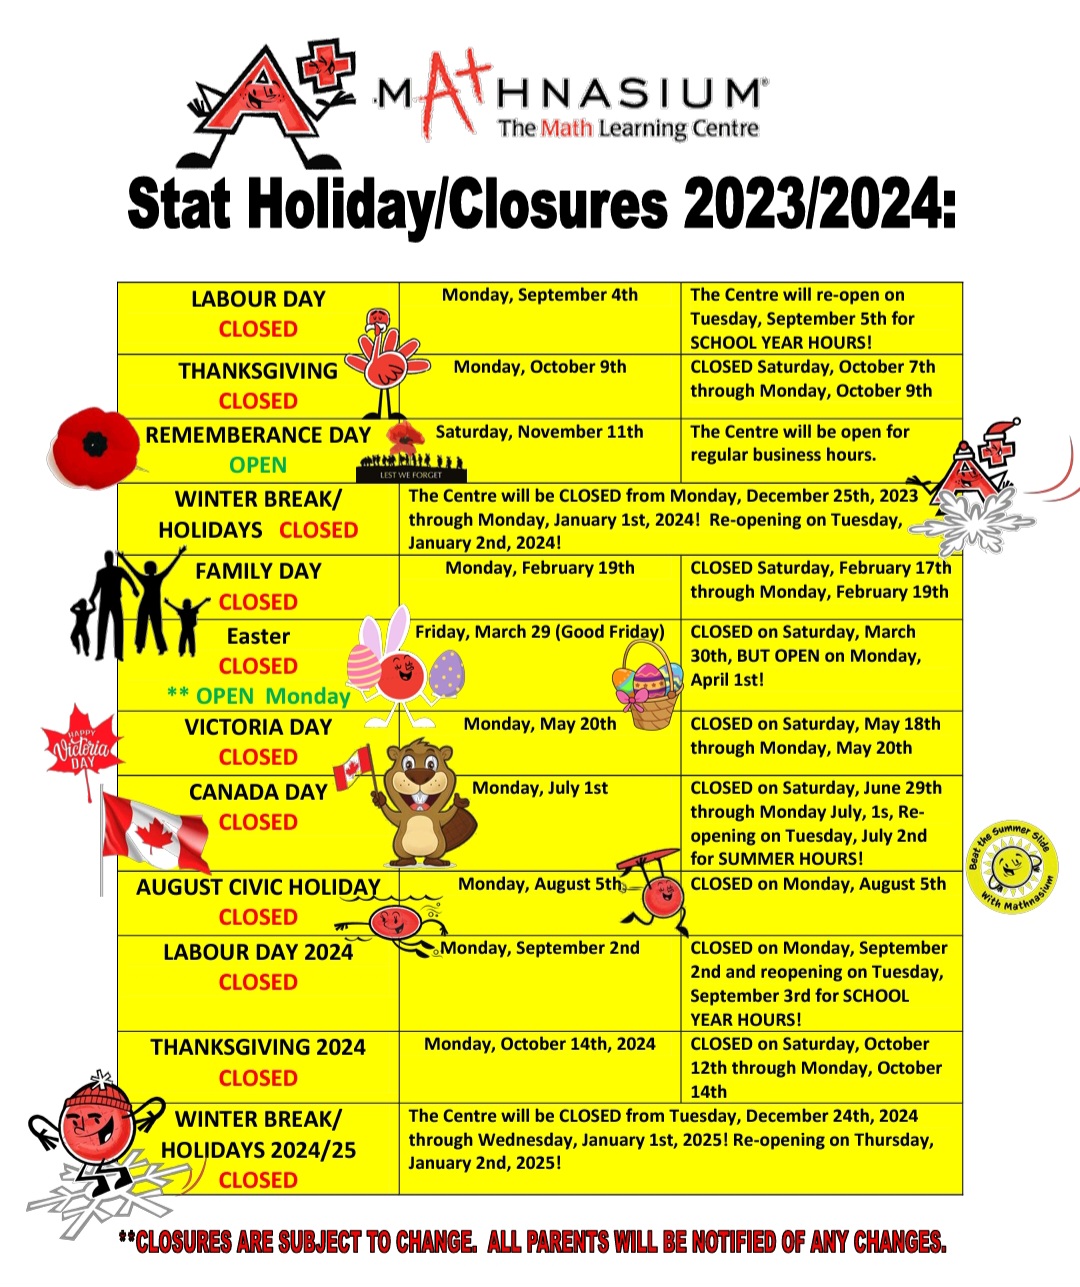 2023/24 Stat Holiday/Closures